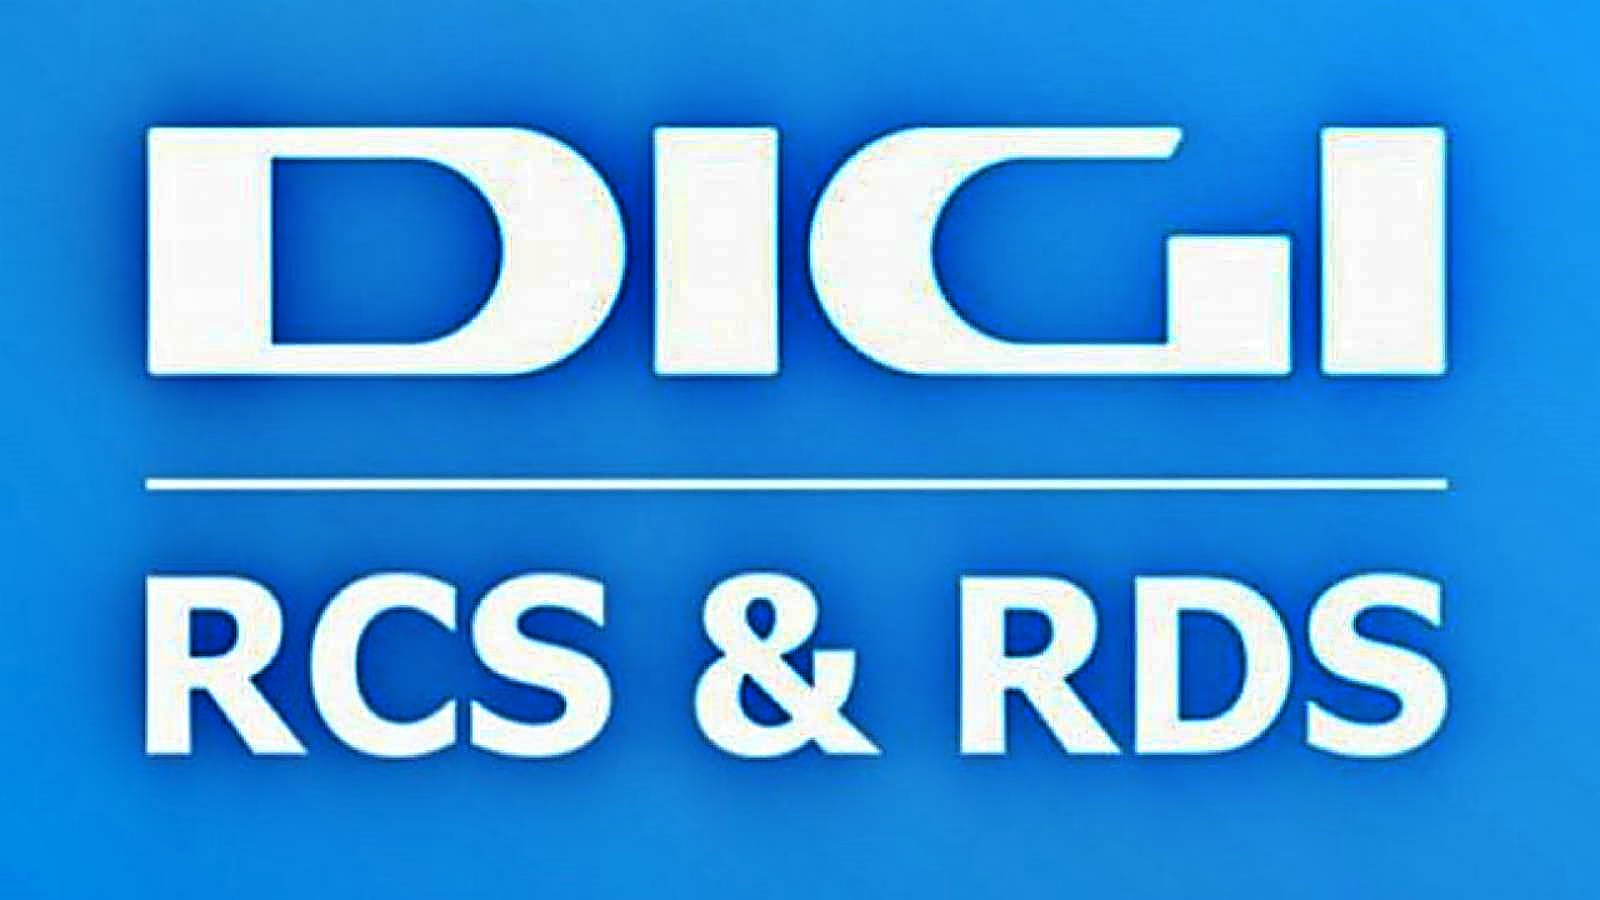 DIGI RCS & RDS Notificarea Deciziei Impact MAJOR Clientii Romania